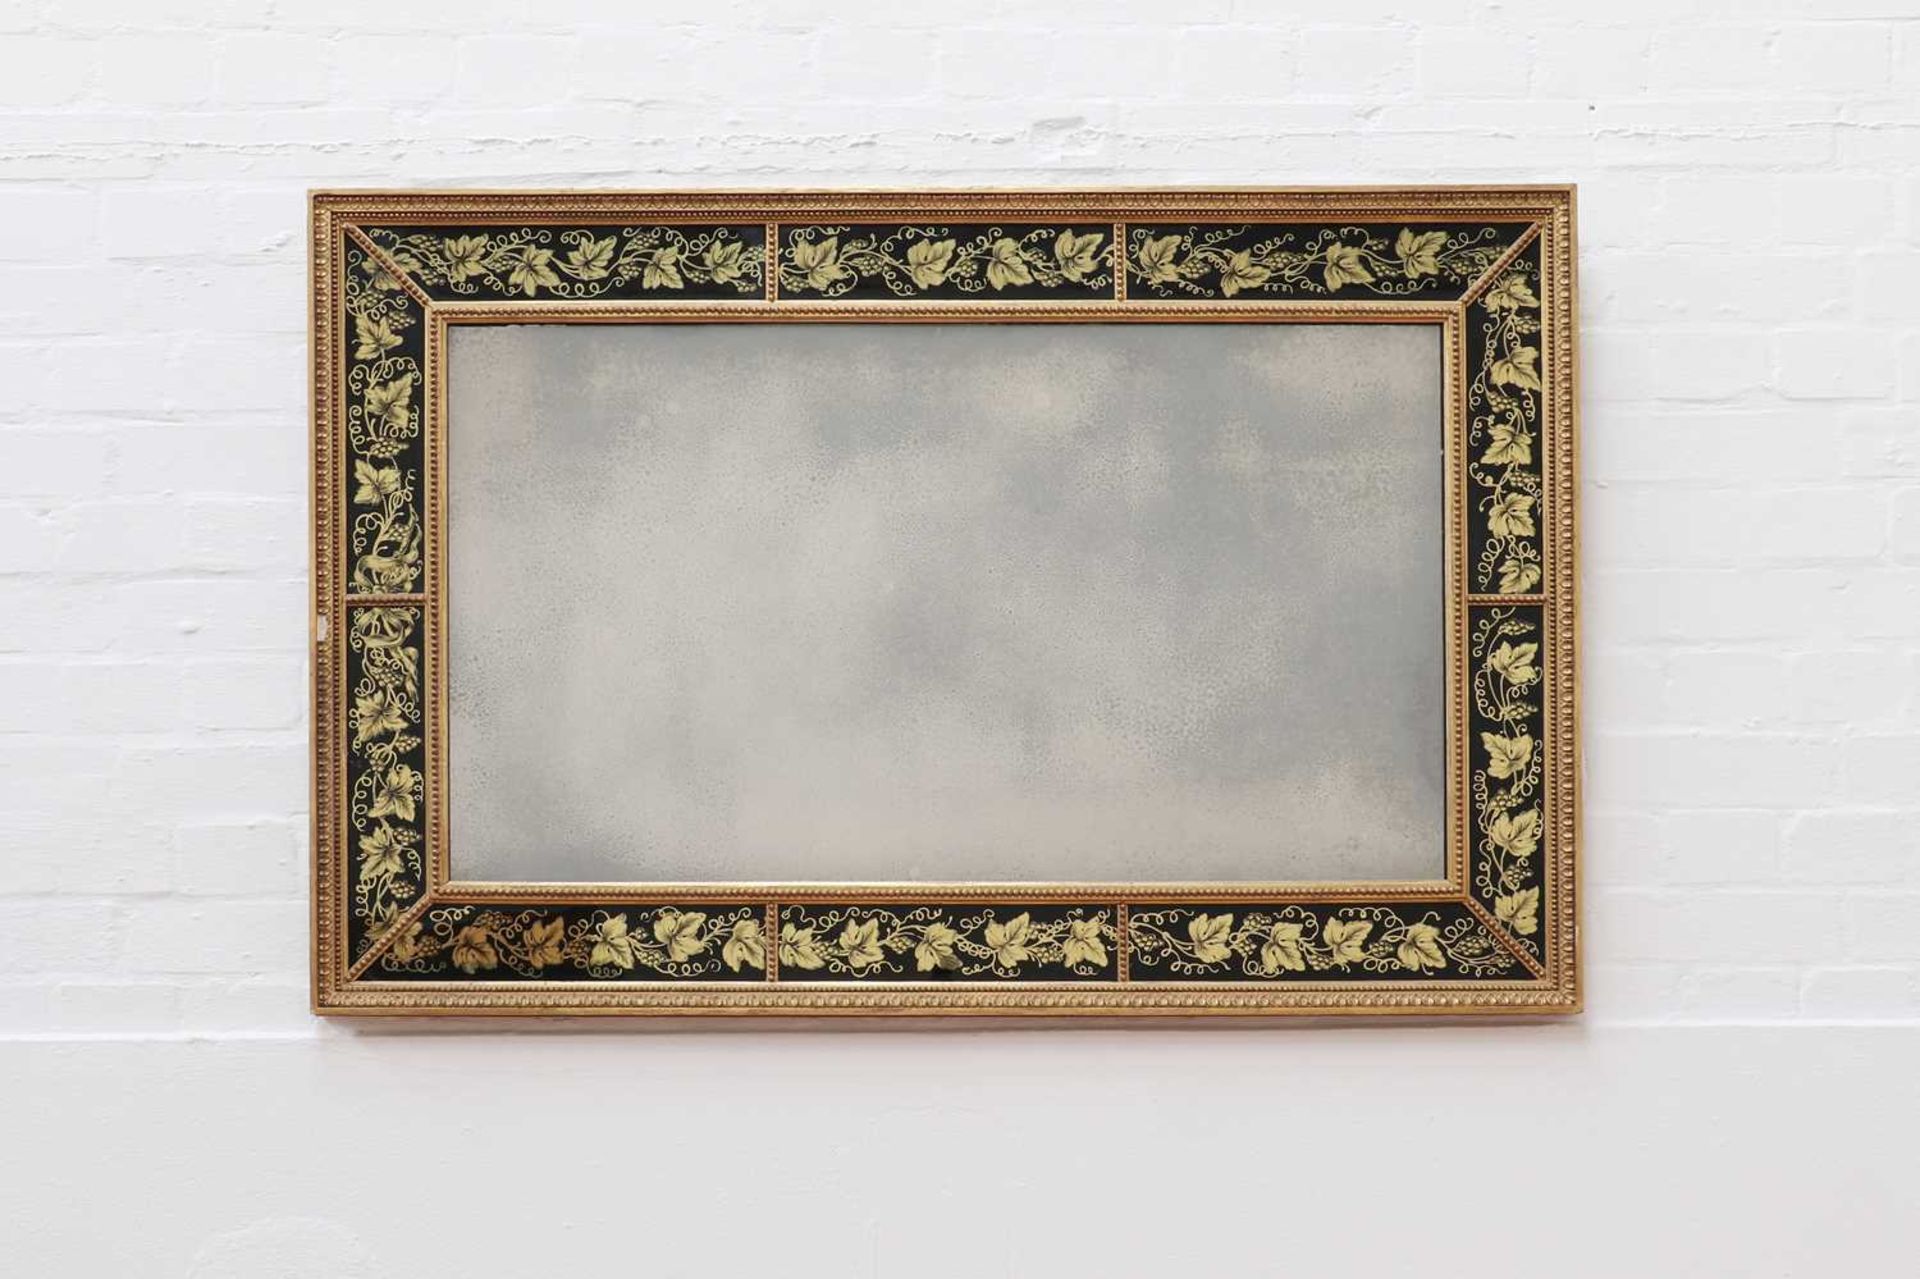 A George III-style rectangular verre églomisé mirror,